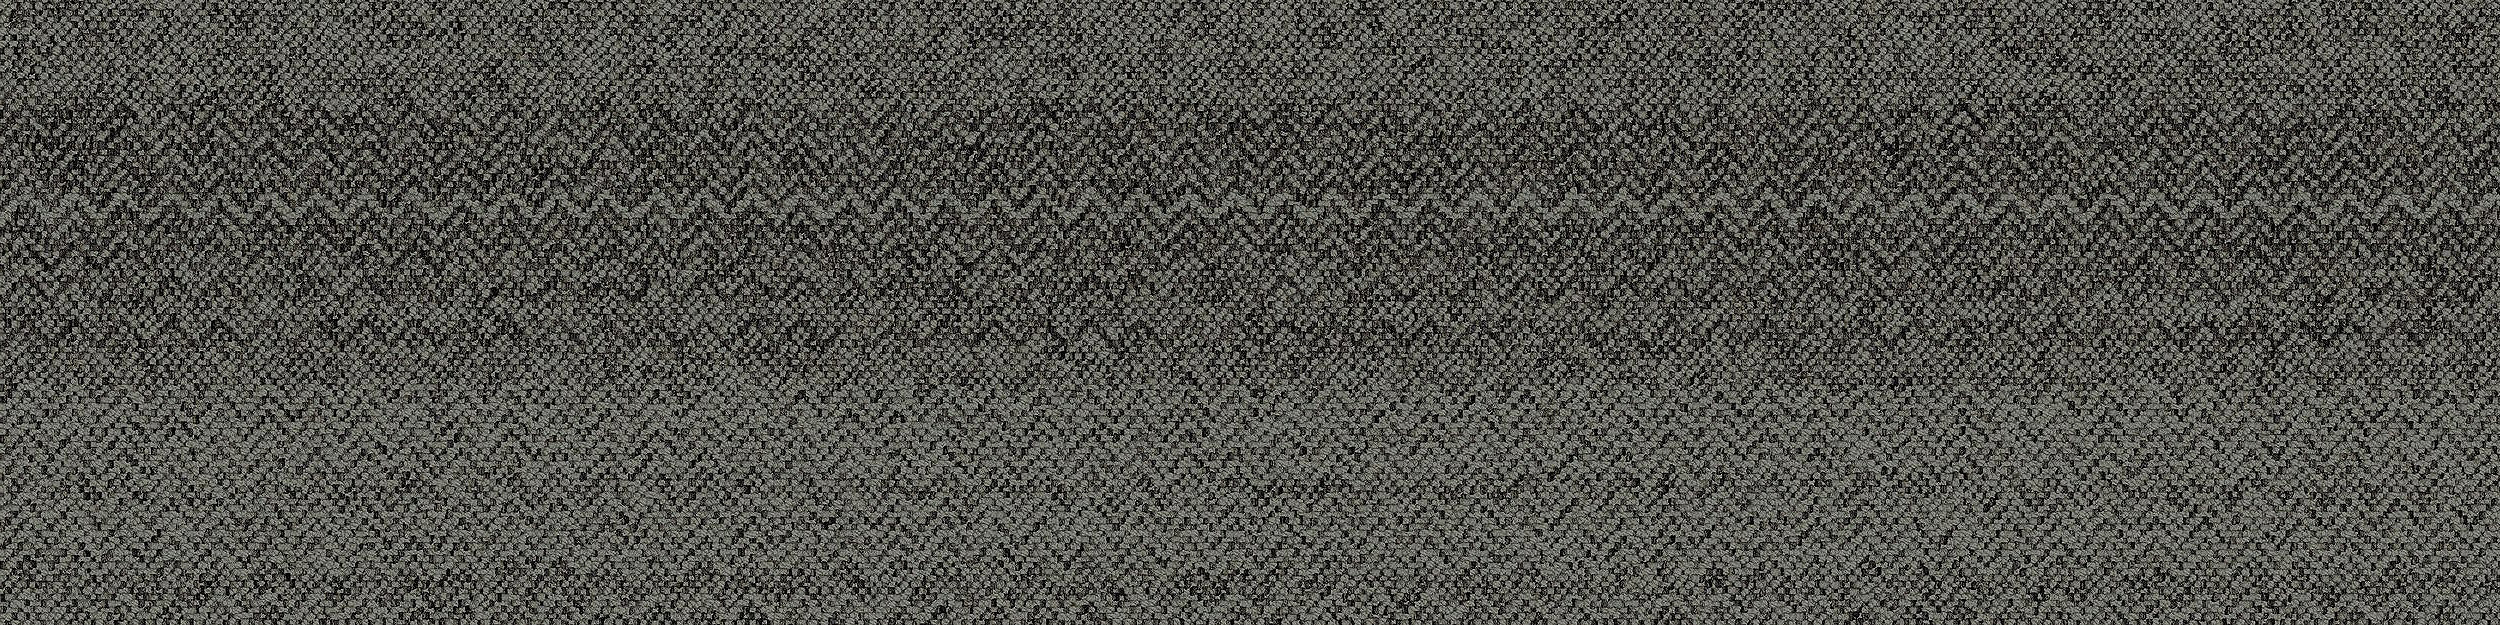 Stitchery Carpet Tile In Nickel Stitchery numéro d’image 6